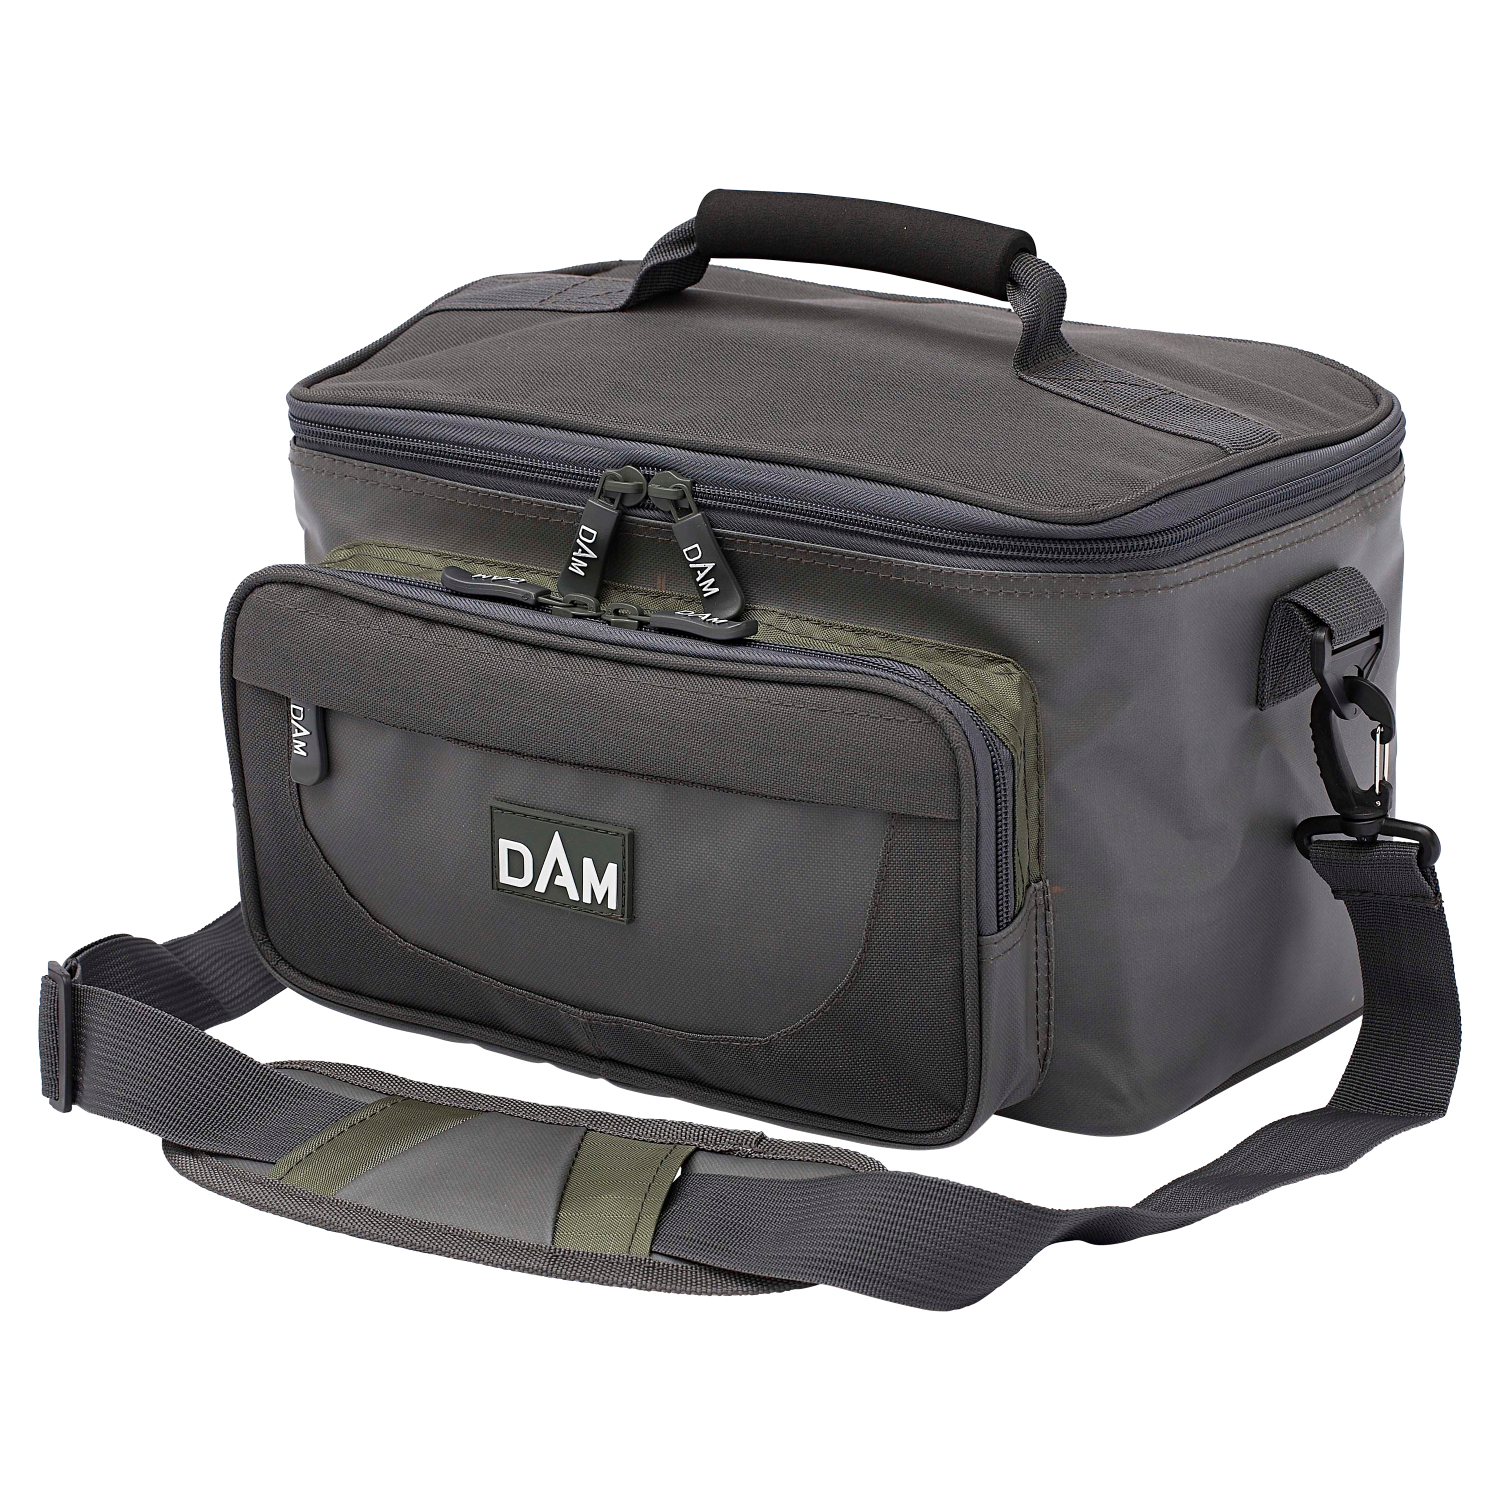 DAM Cooler Bag 